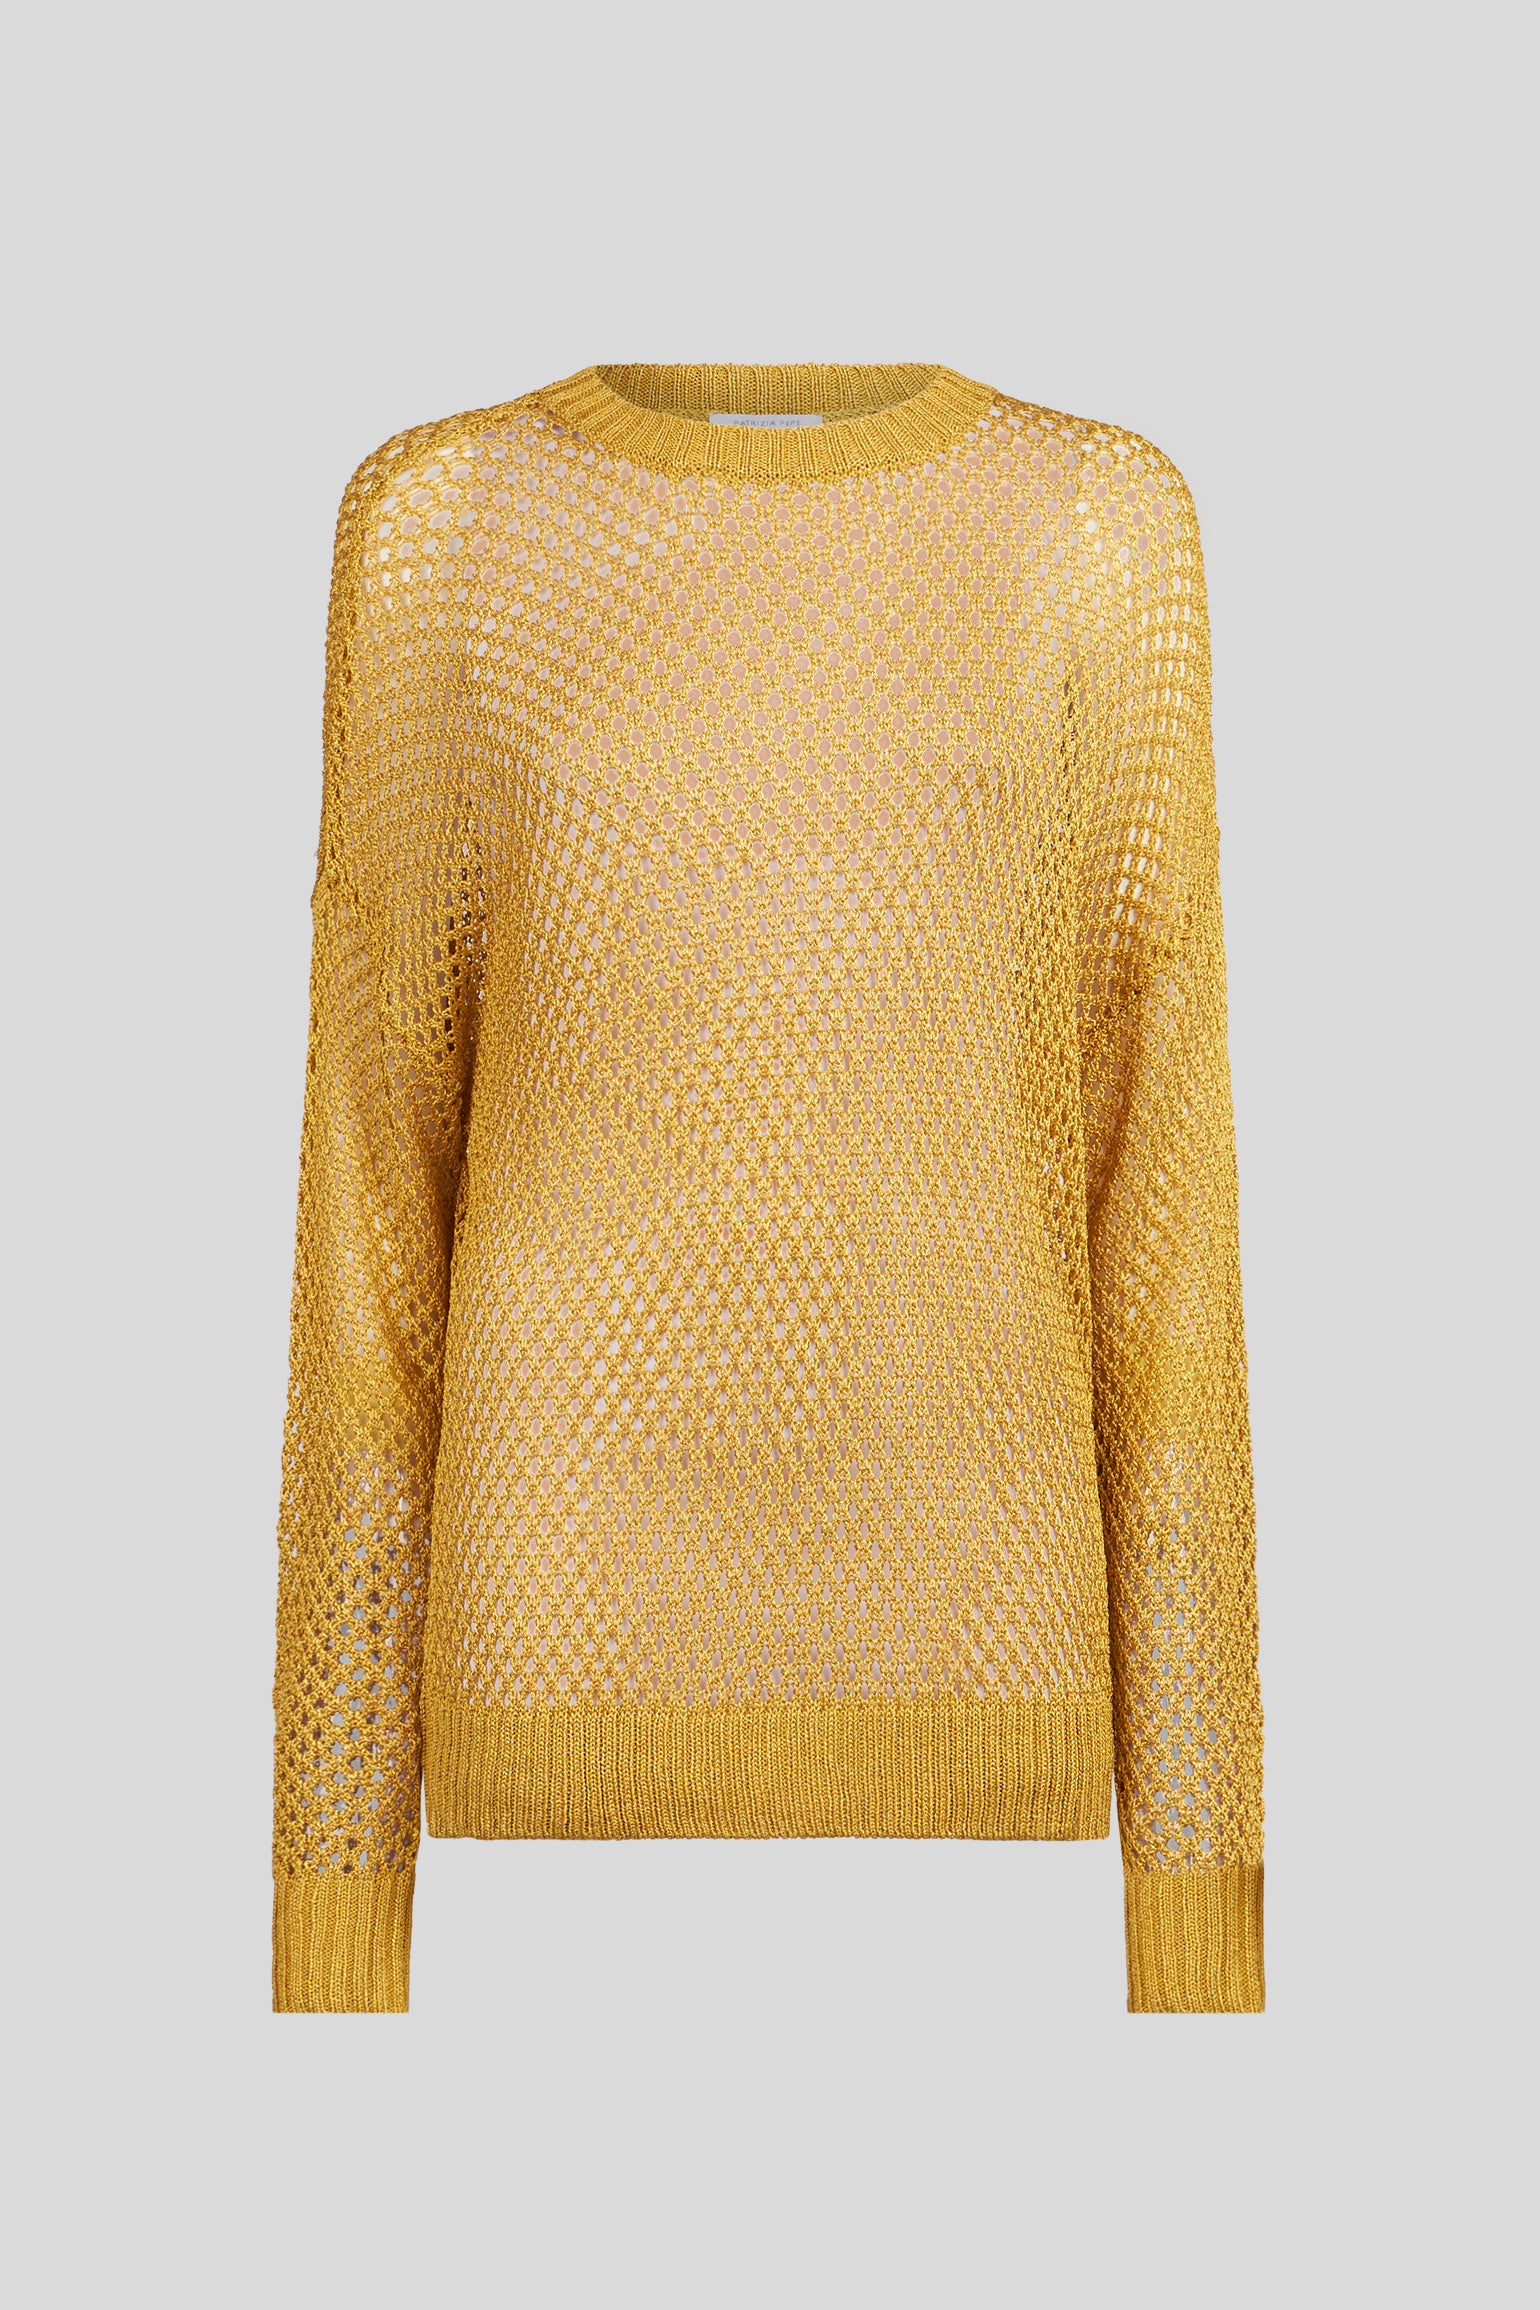 PATRIZIA PEPE Gold Mesh Effect Sweater